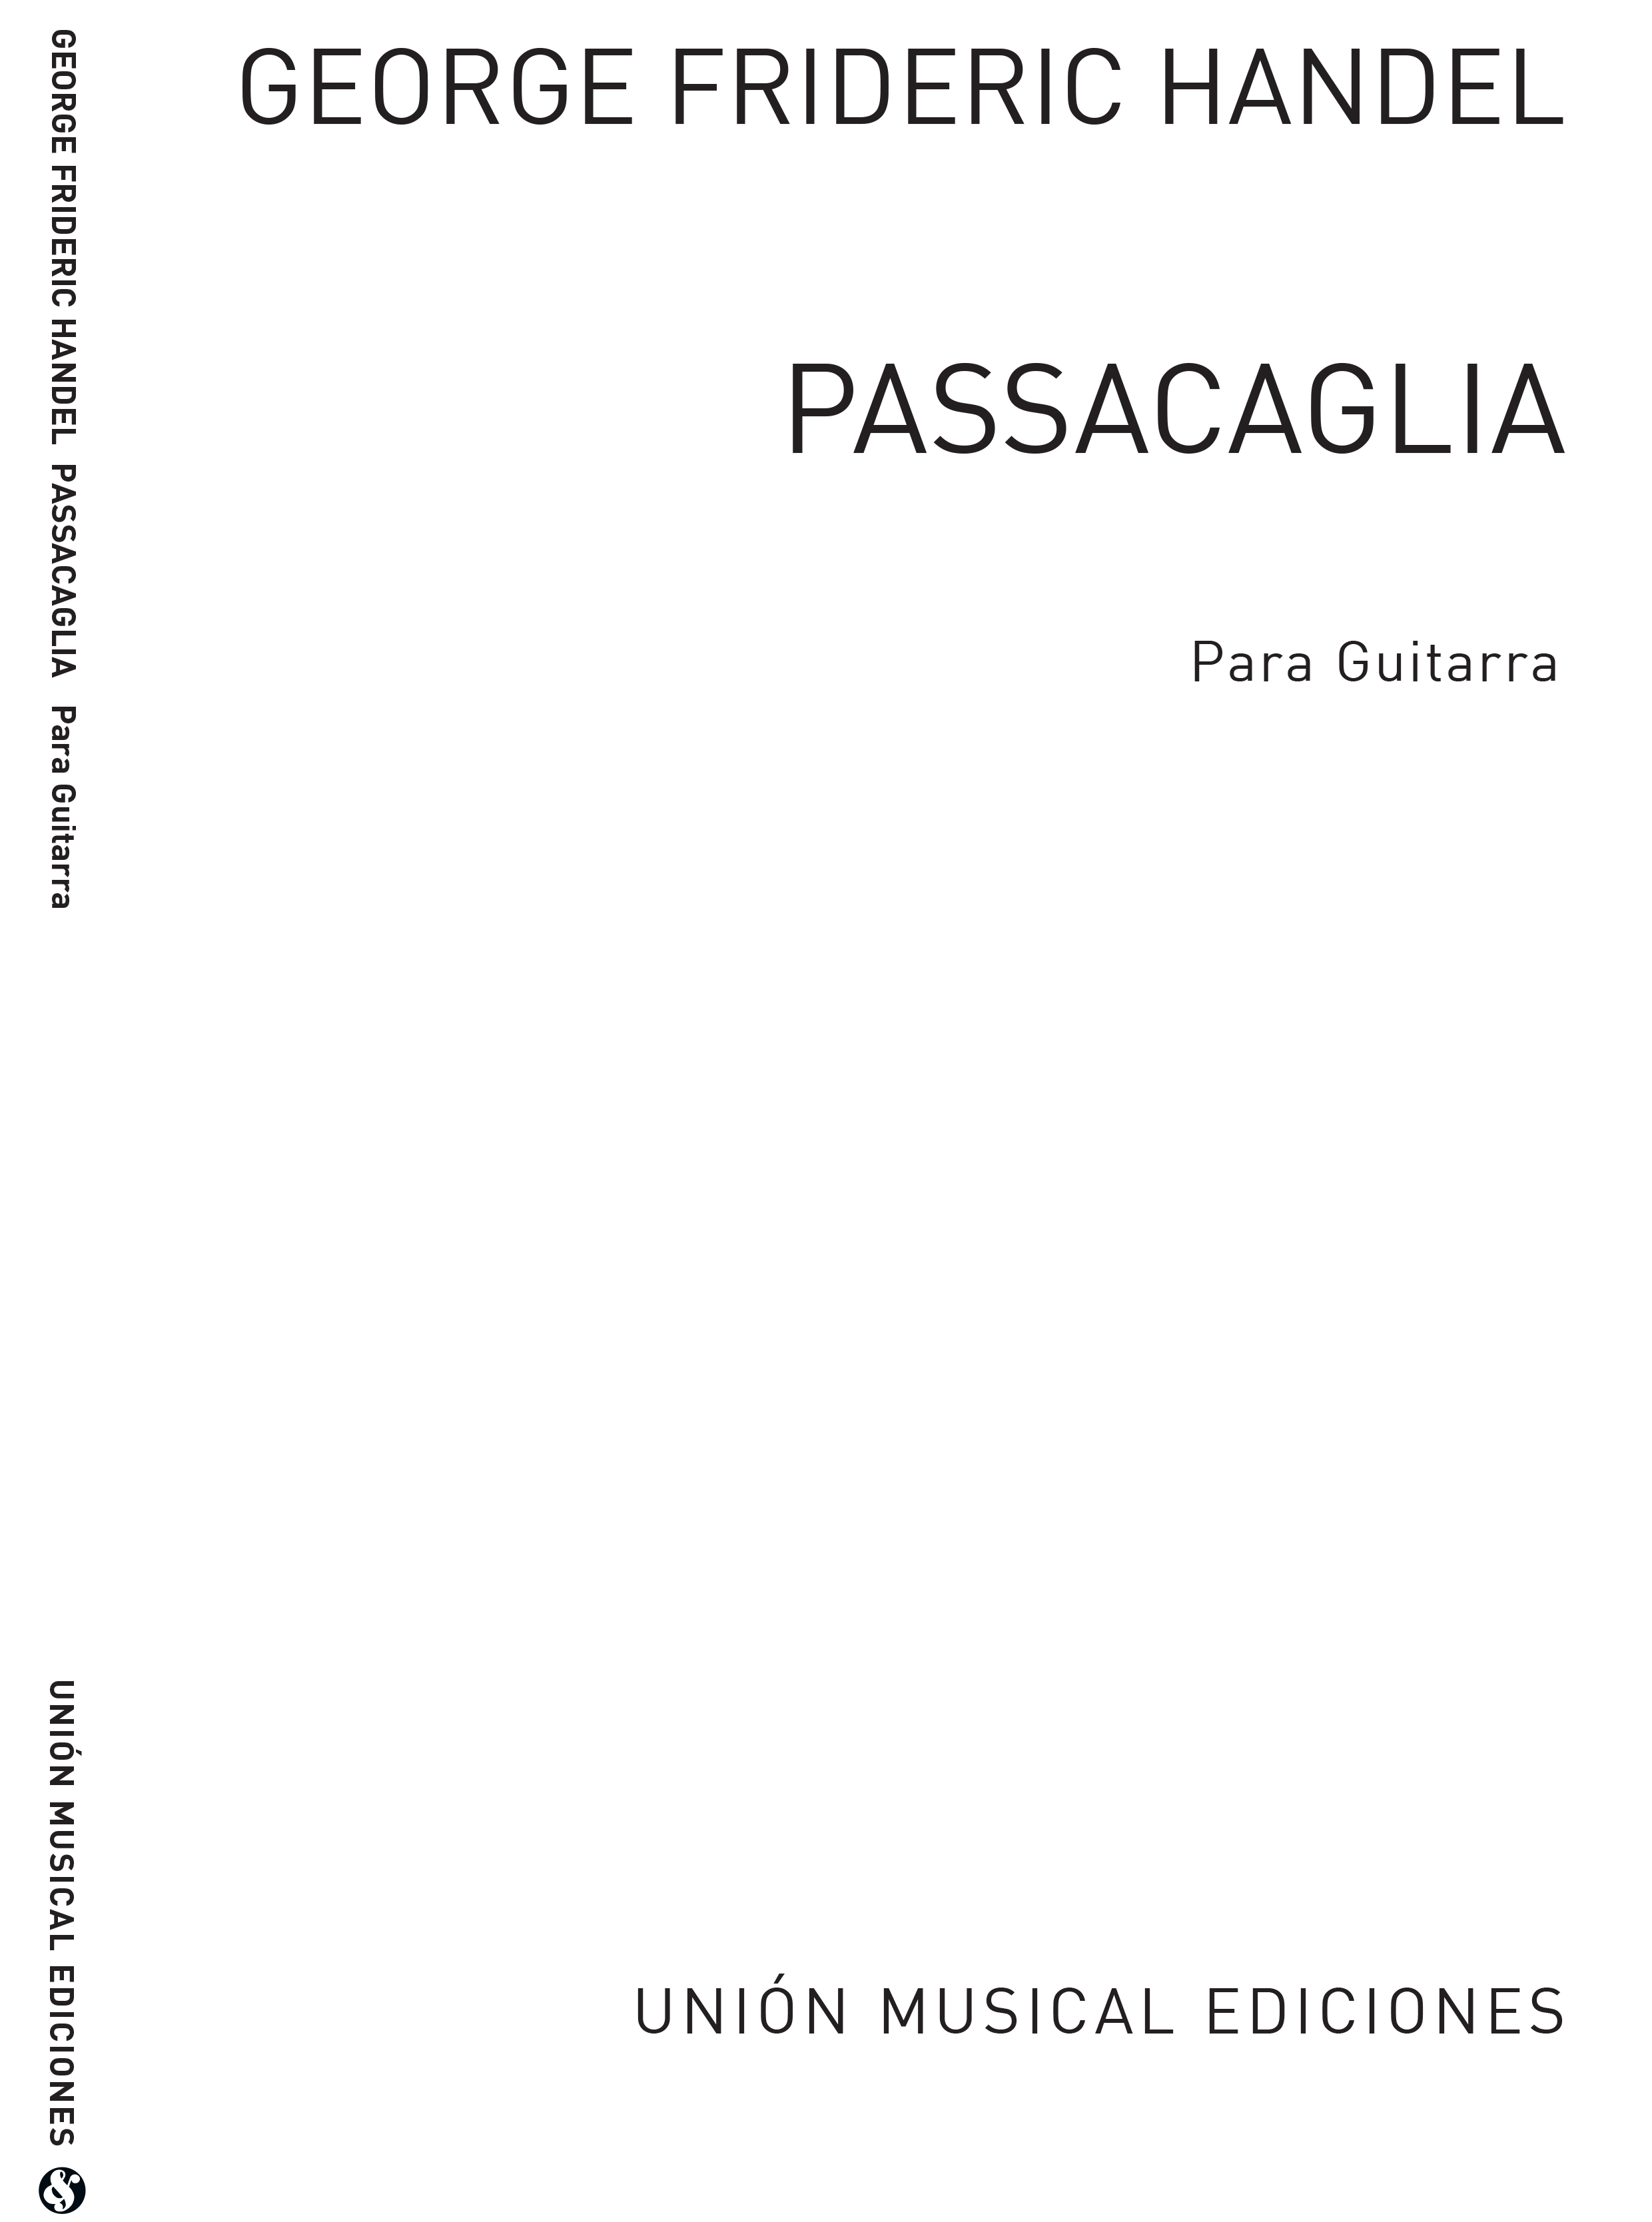 Haendel: Passacaglia (Garcia Velasco) for Guitar